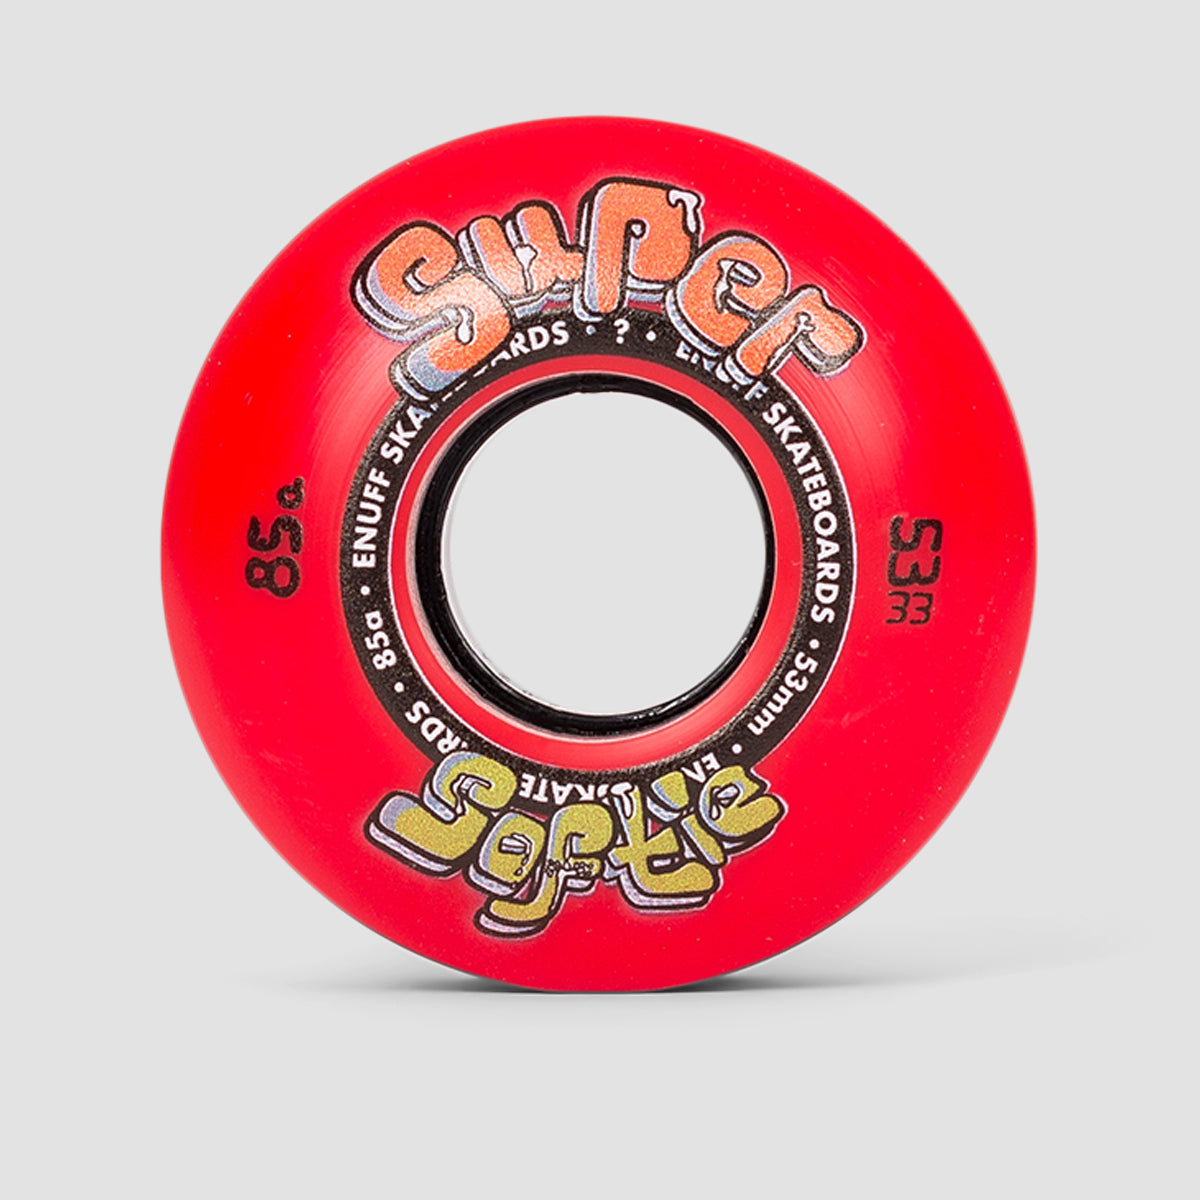 Enuff Super Softie Skateboard Wheels Red 53mm